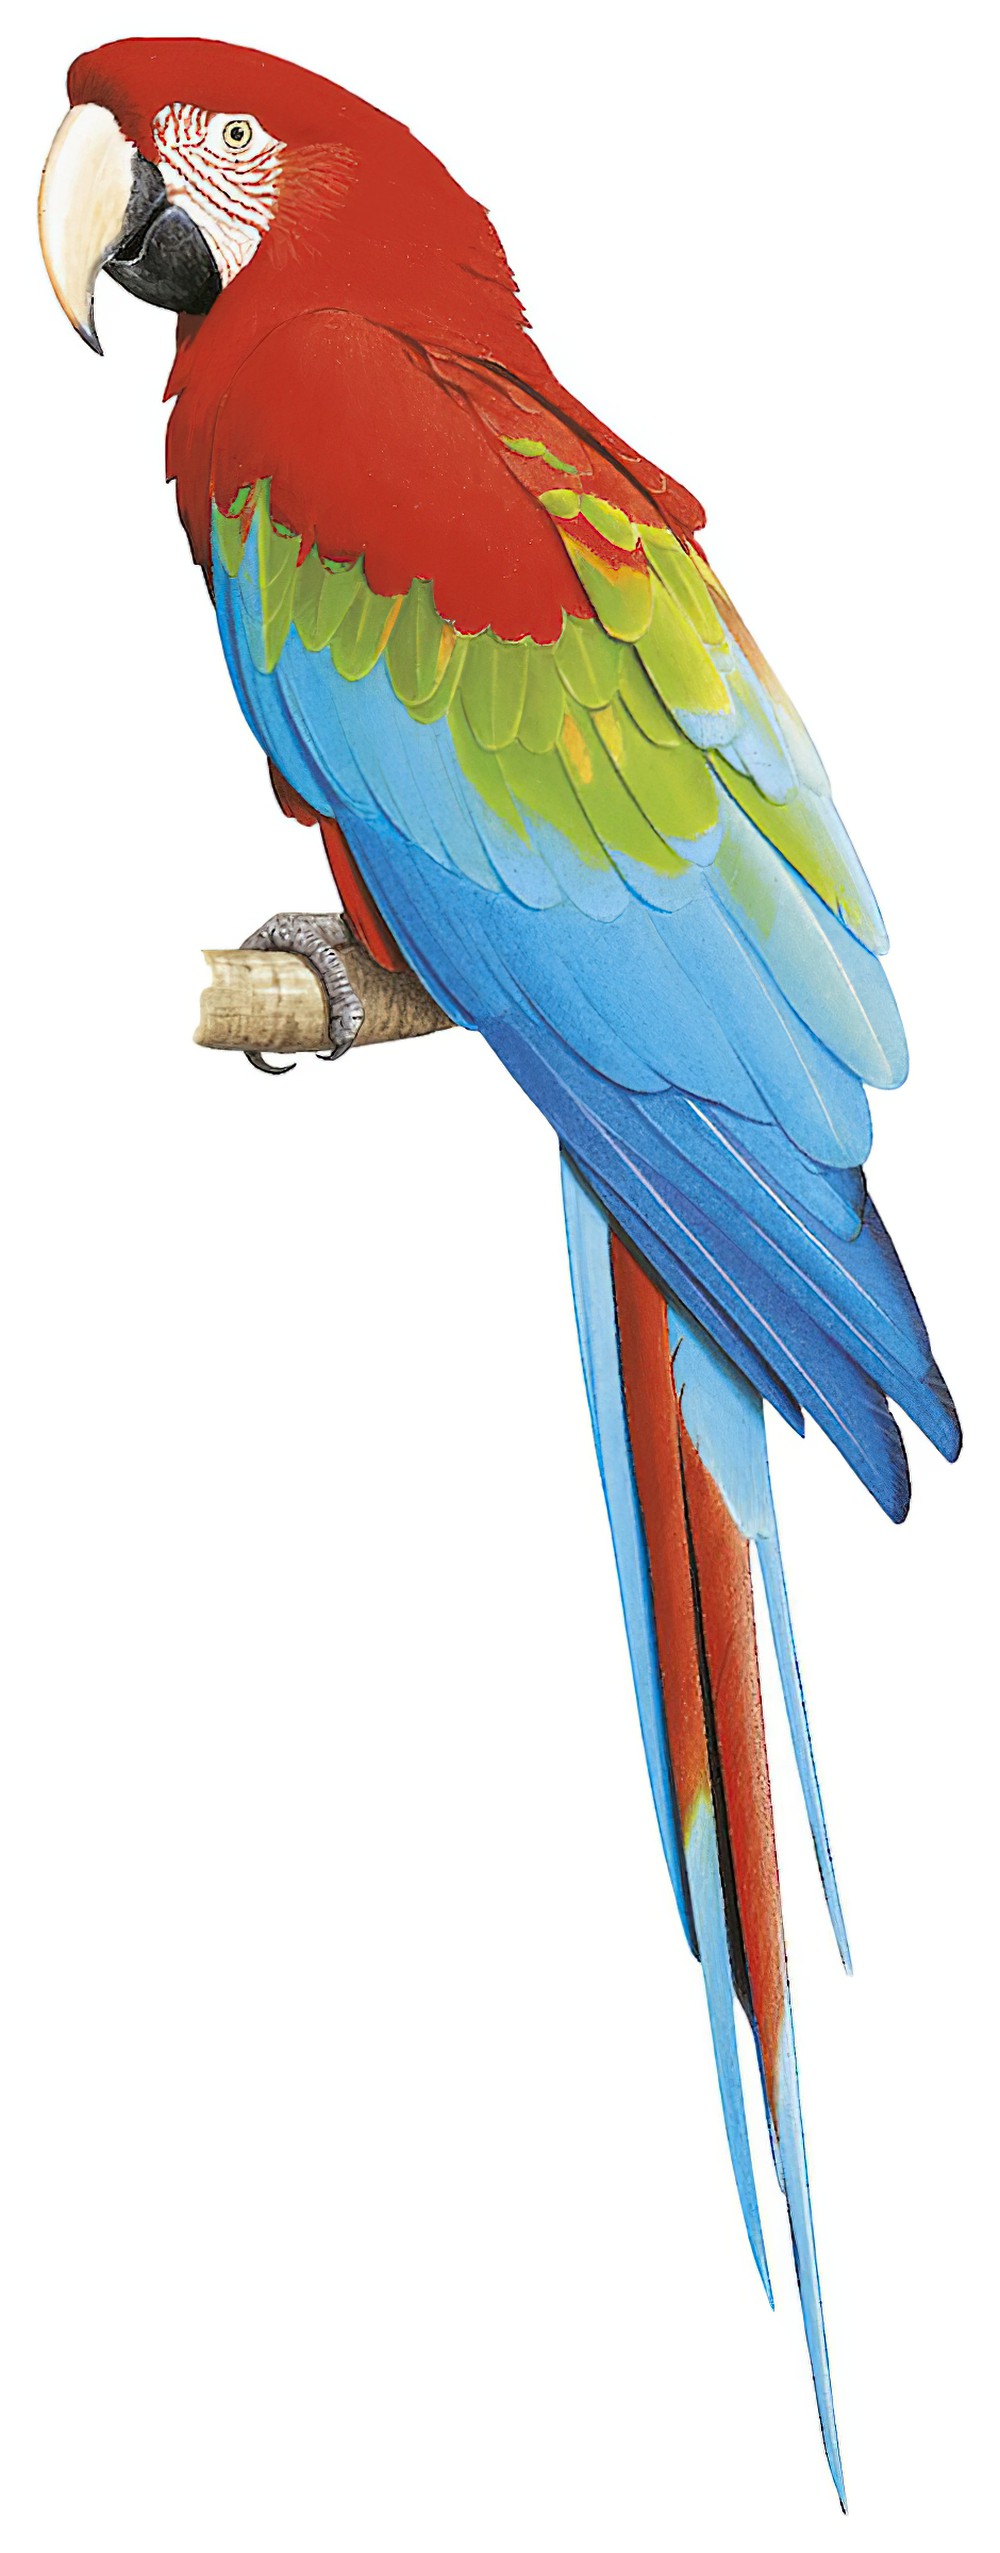 Red-and-green Macaw / Ara chloropterus